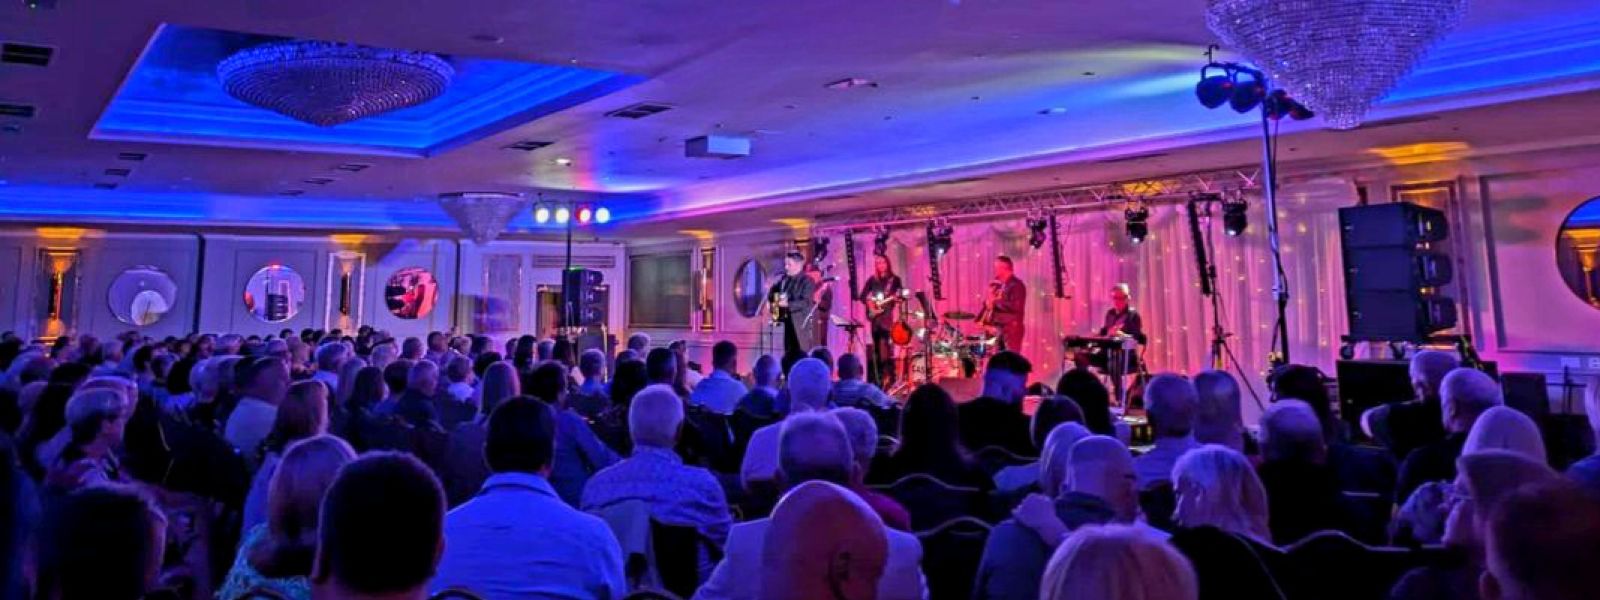 Concert at Talbot Hotel Clonmel